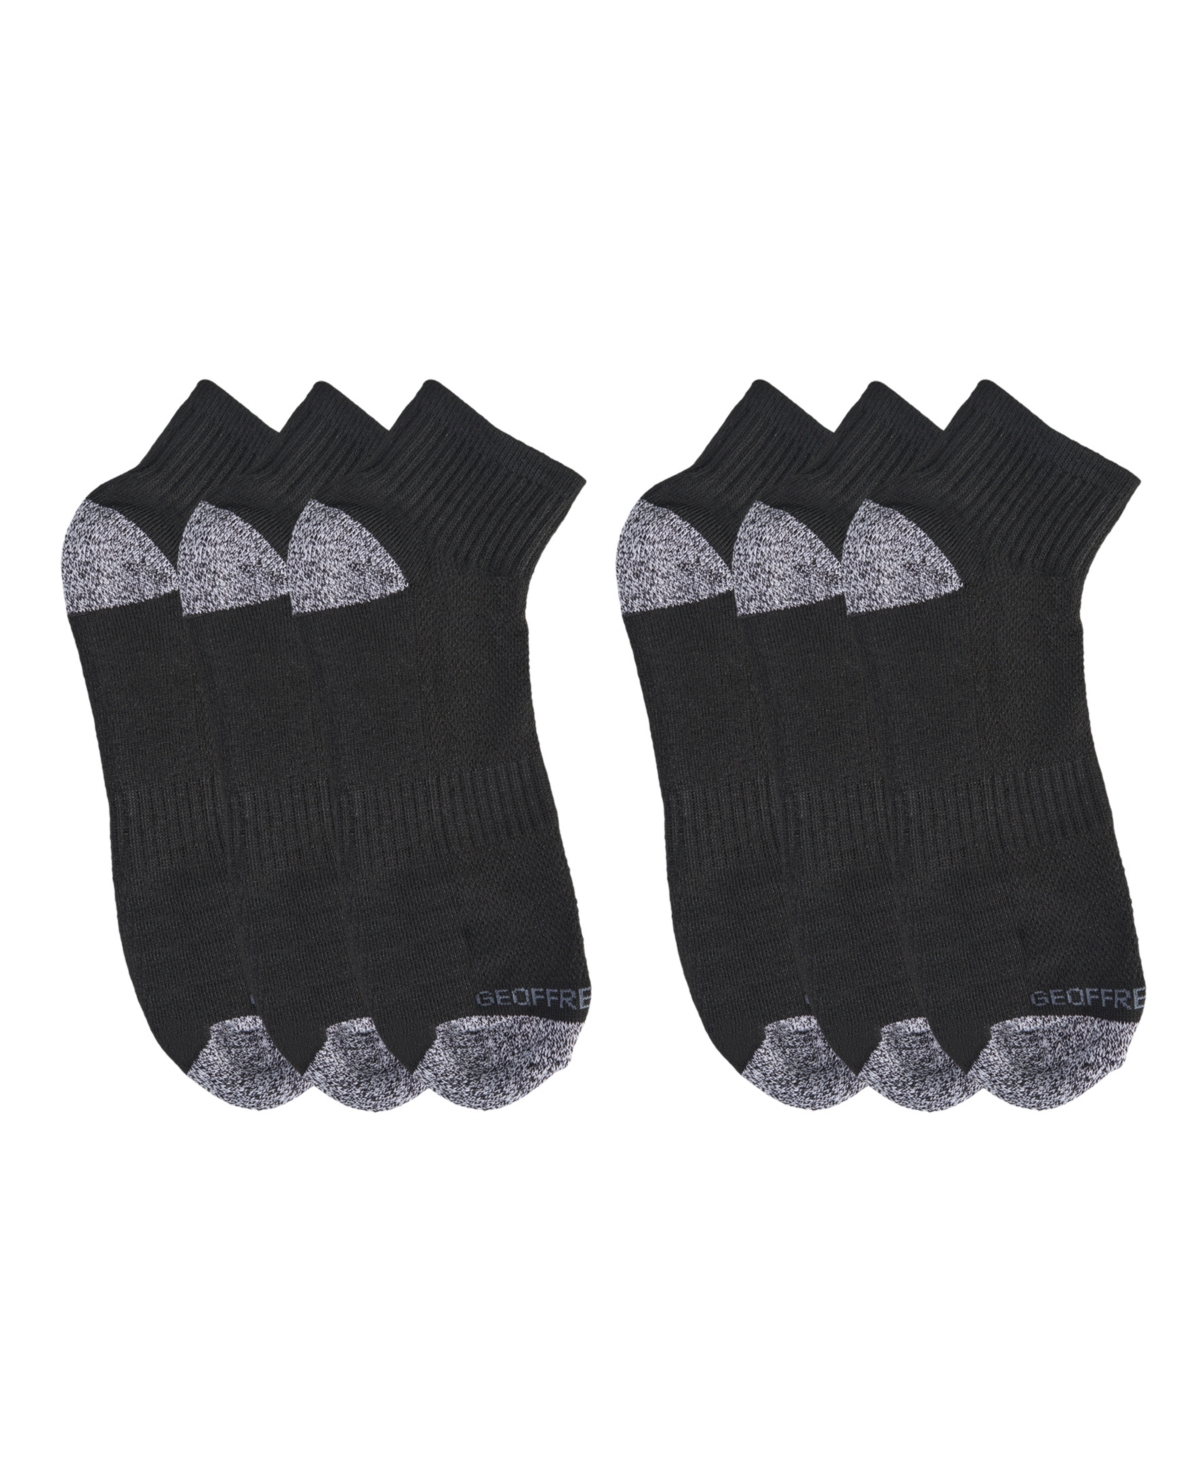 Geoffrey Beene Men's Cushioned Quarter Crew Socks, Pack Of 6 In Black